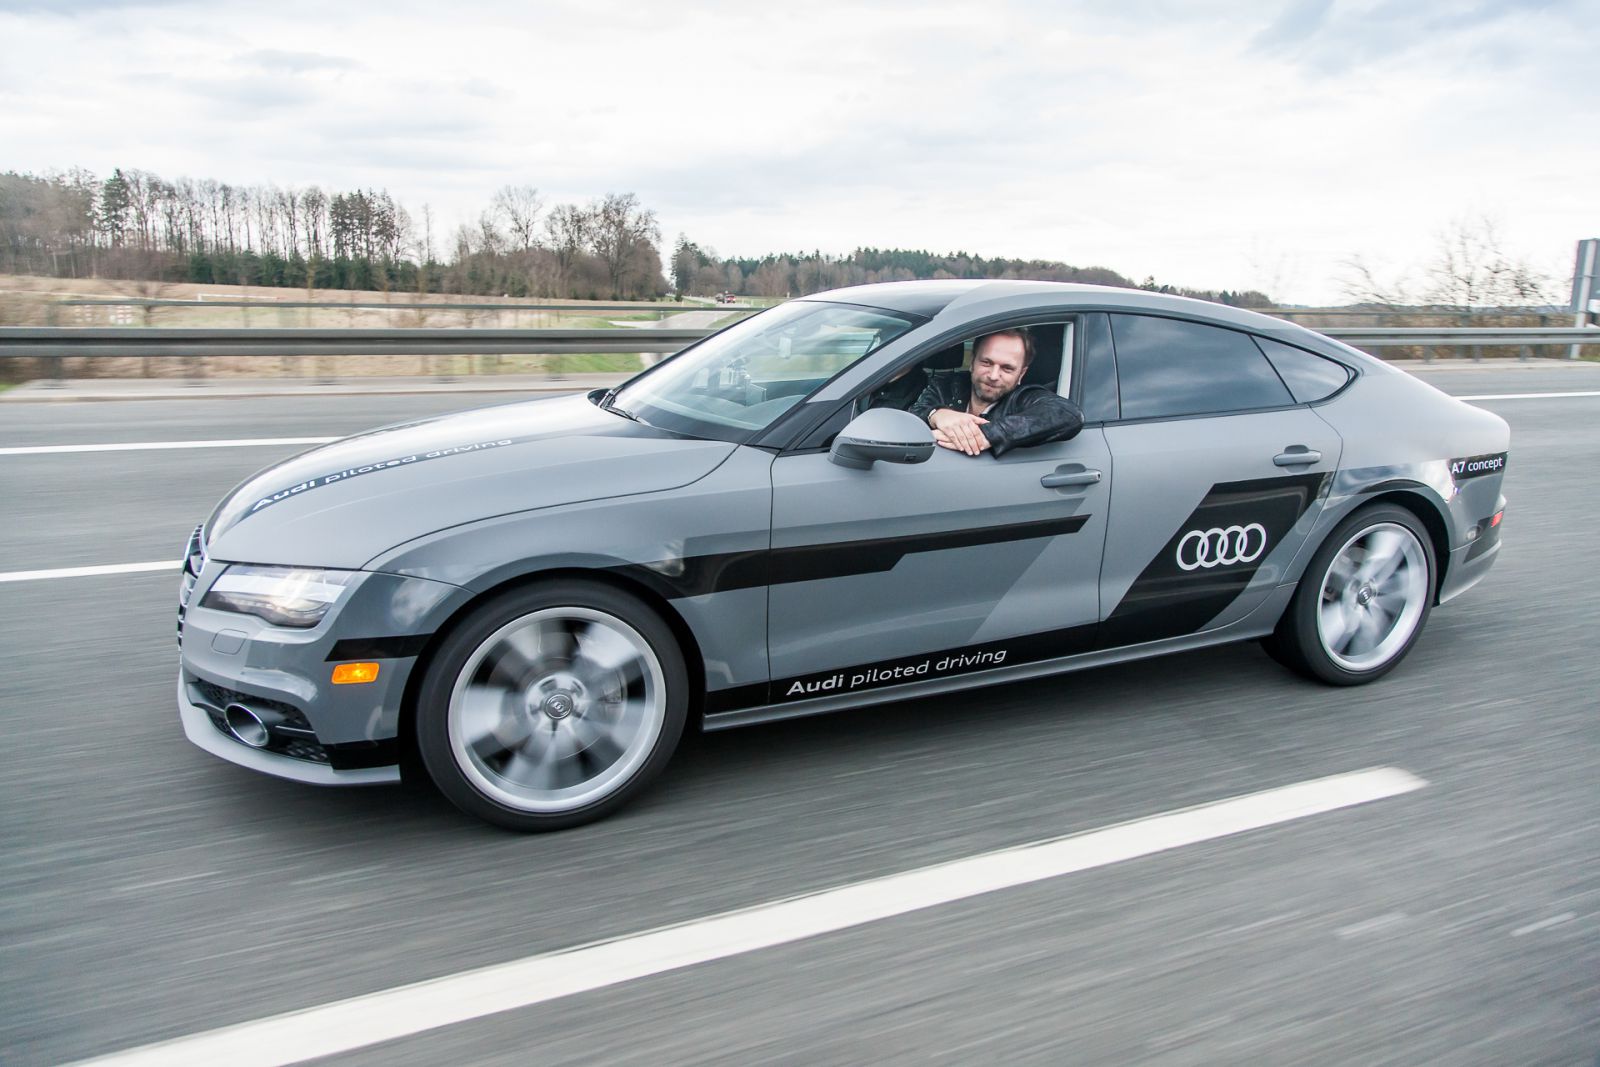 2015-Pilotiertes-Fahren-Audi-A7-Jack-Ingolstadt-19